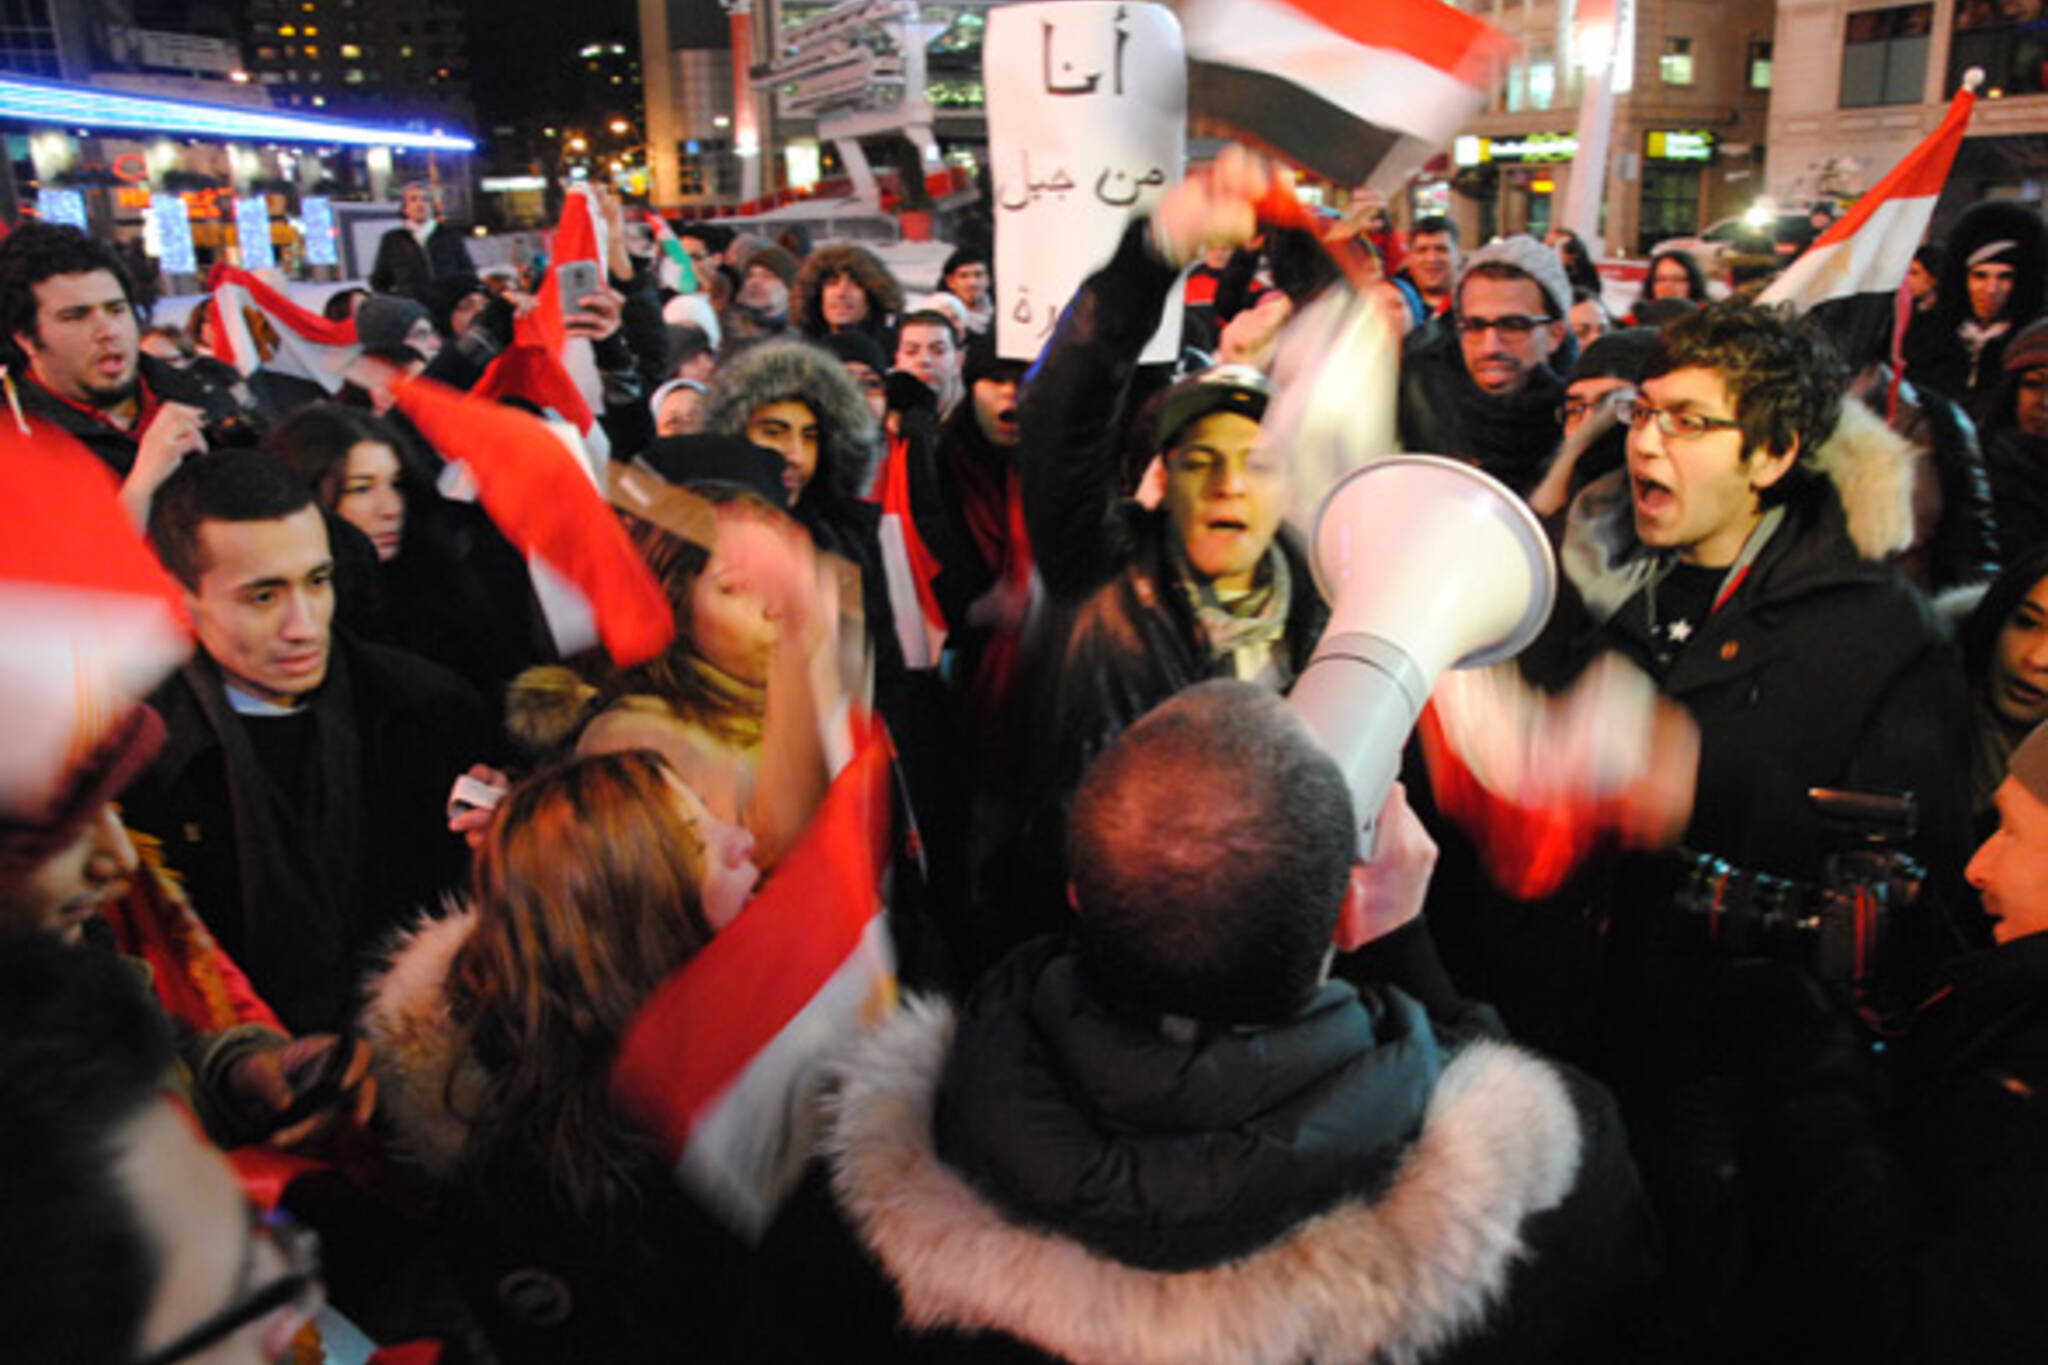 Toronto Egypt Celebrate Mubarak Yonge Dundas